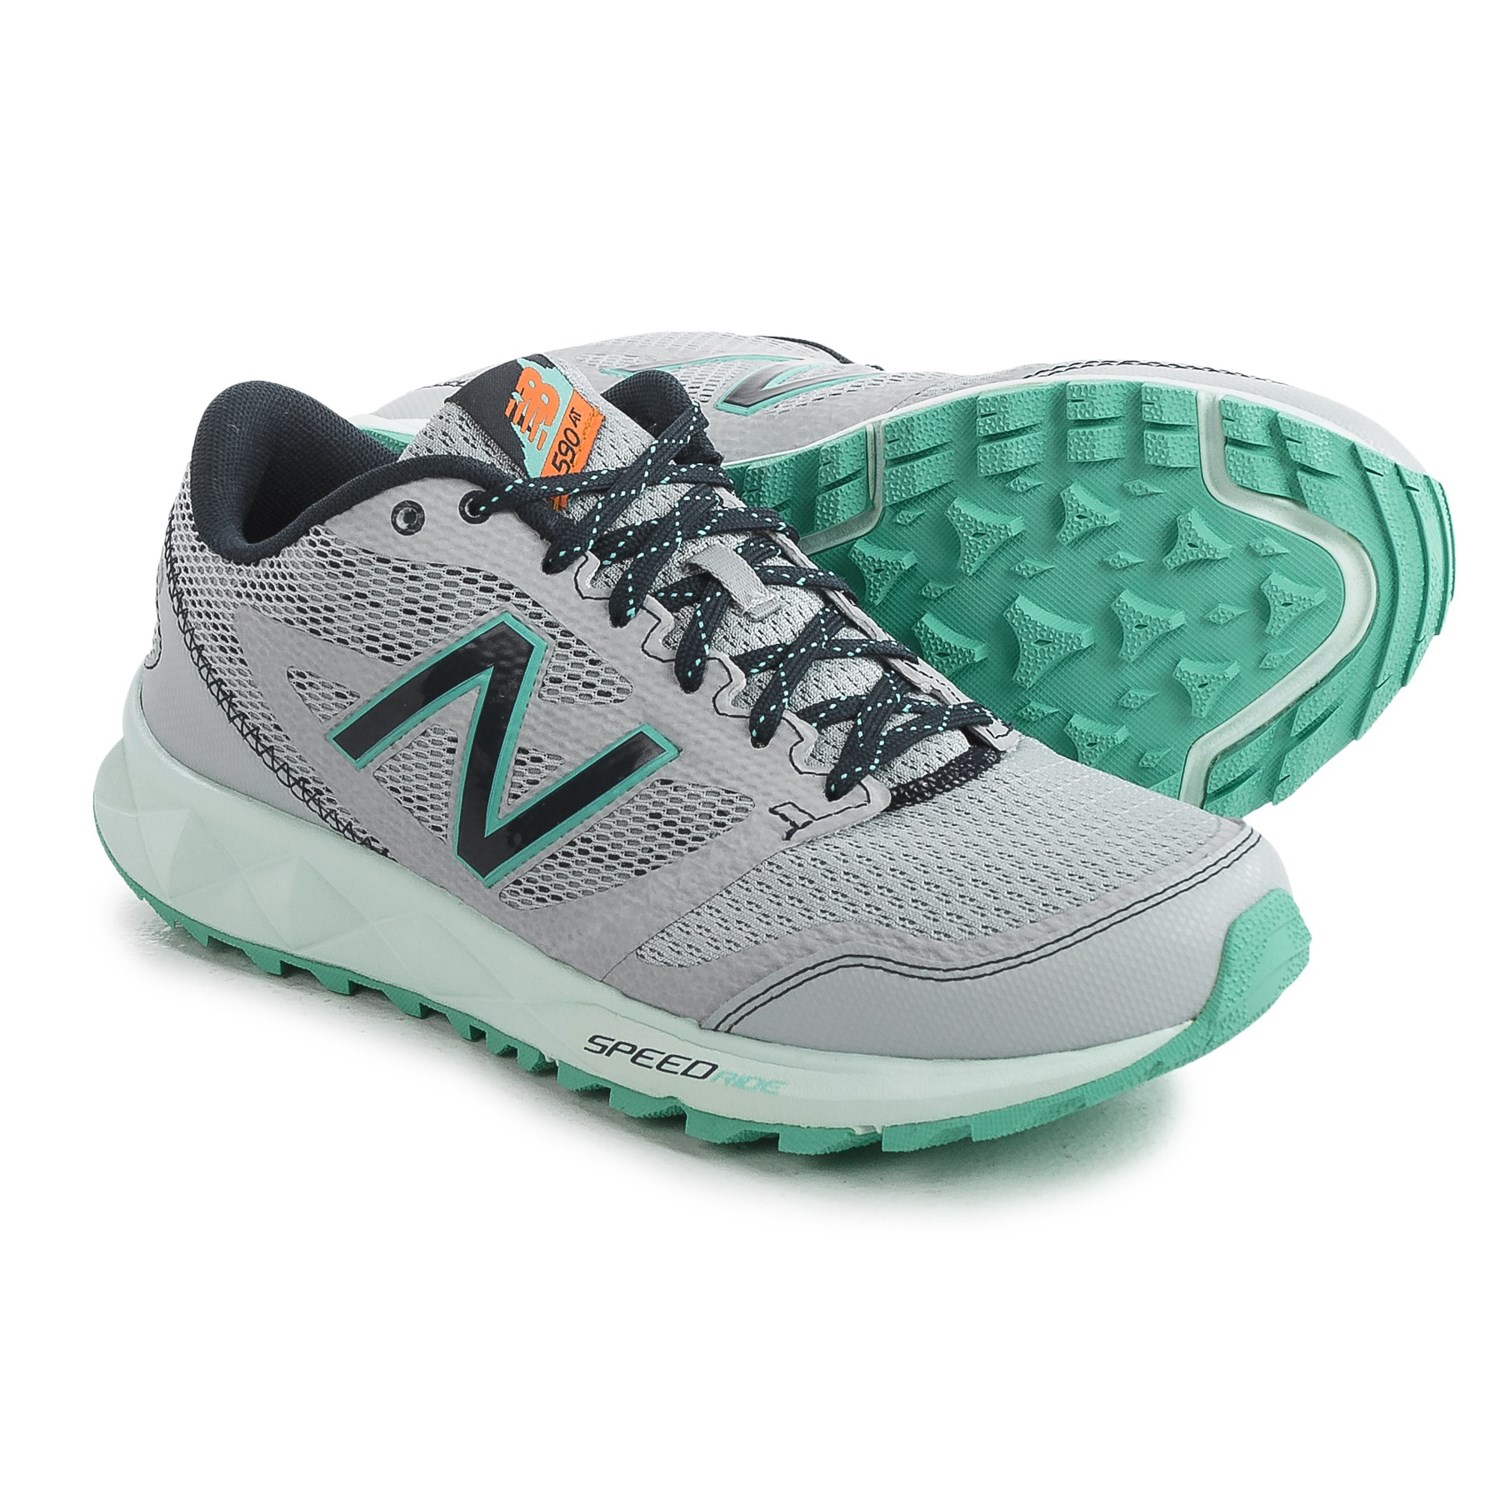 New Balance WT590v2 Trail Running Shoes (For Women)